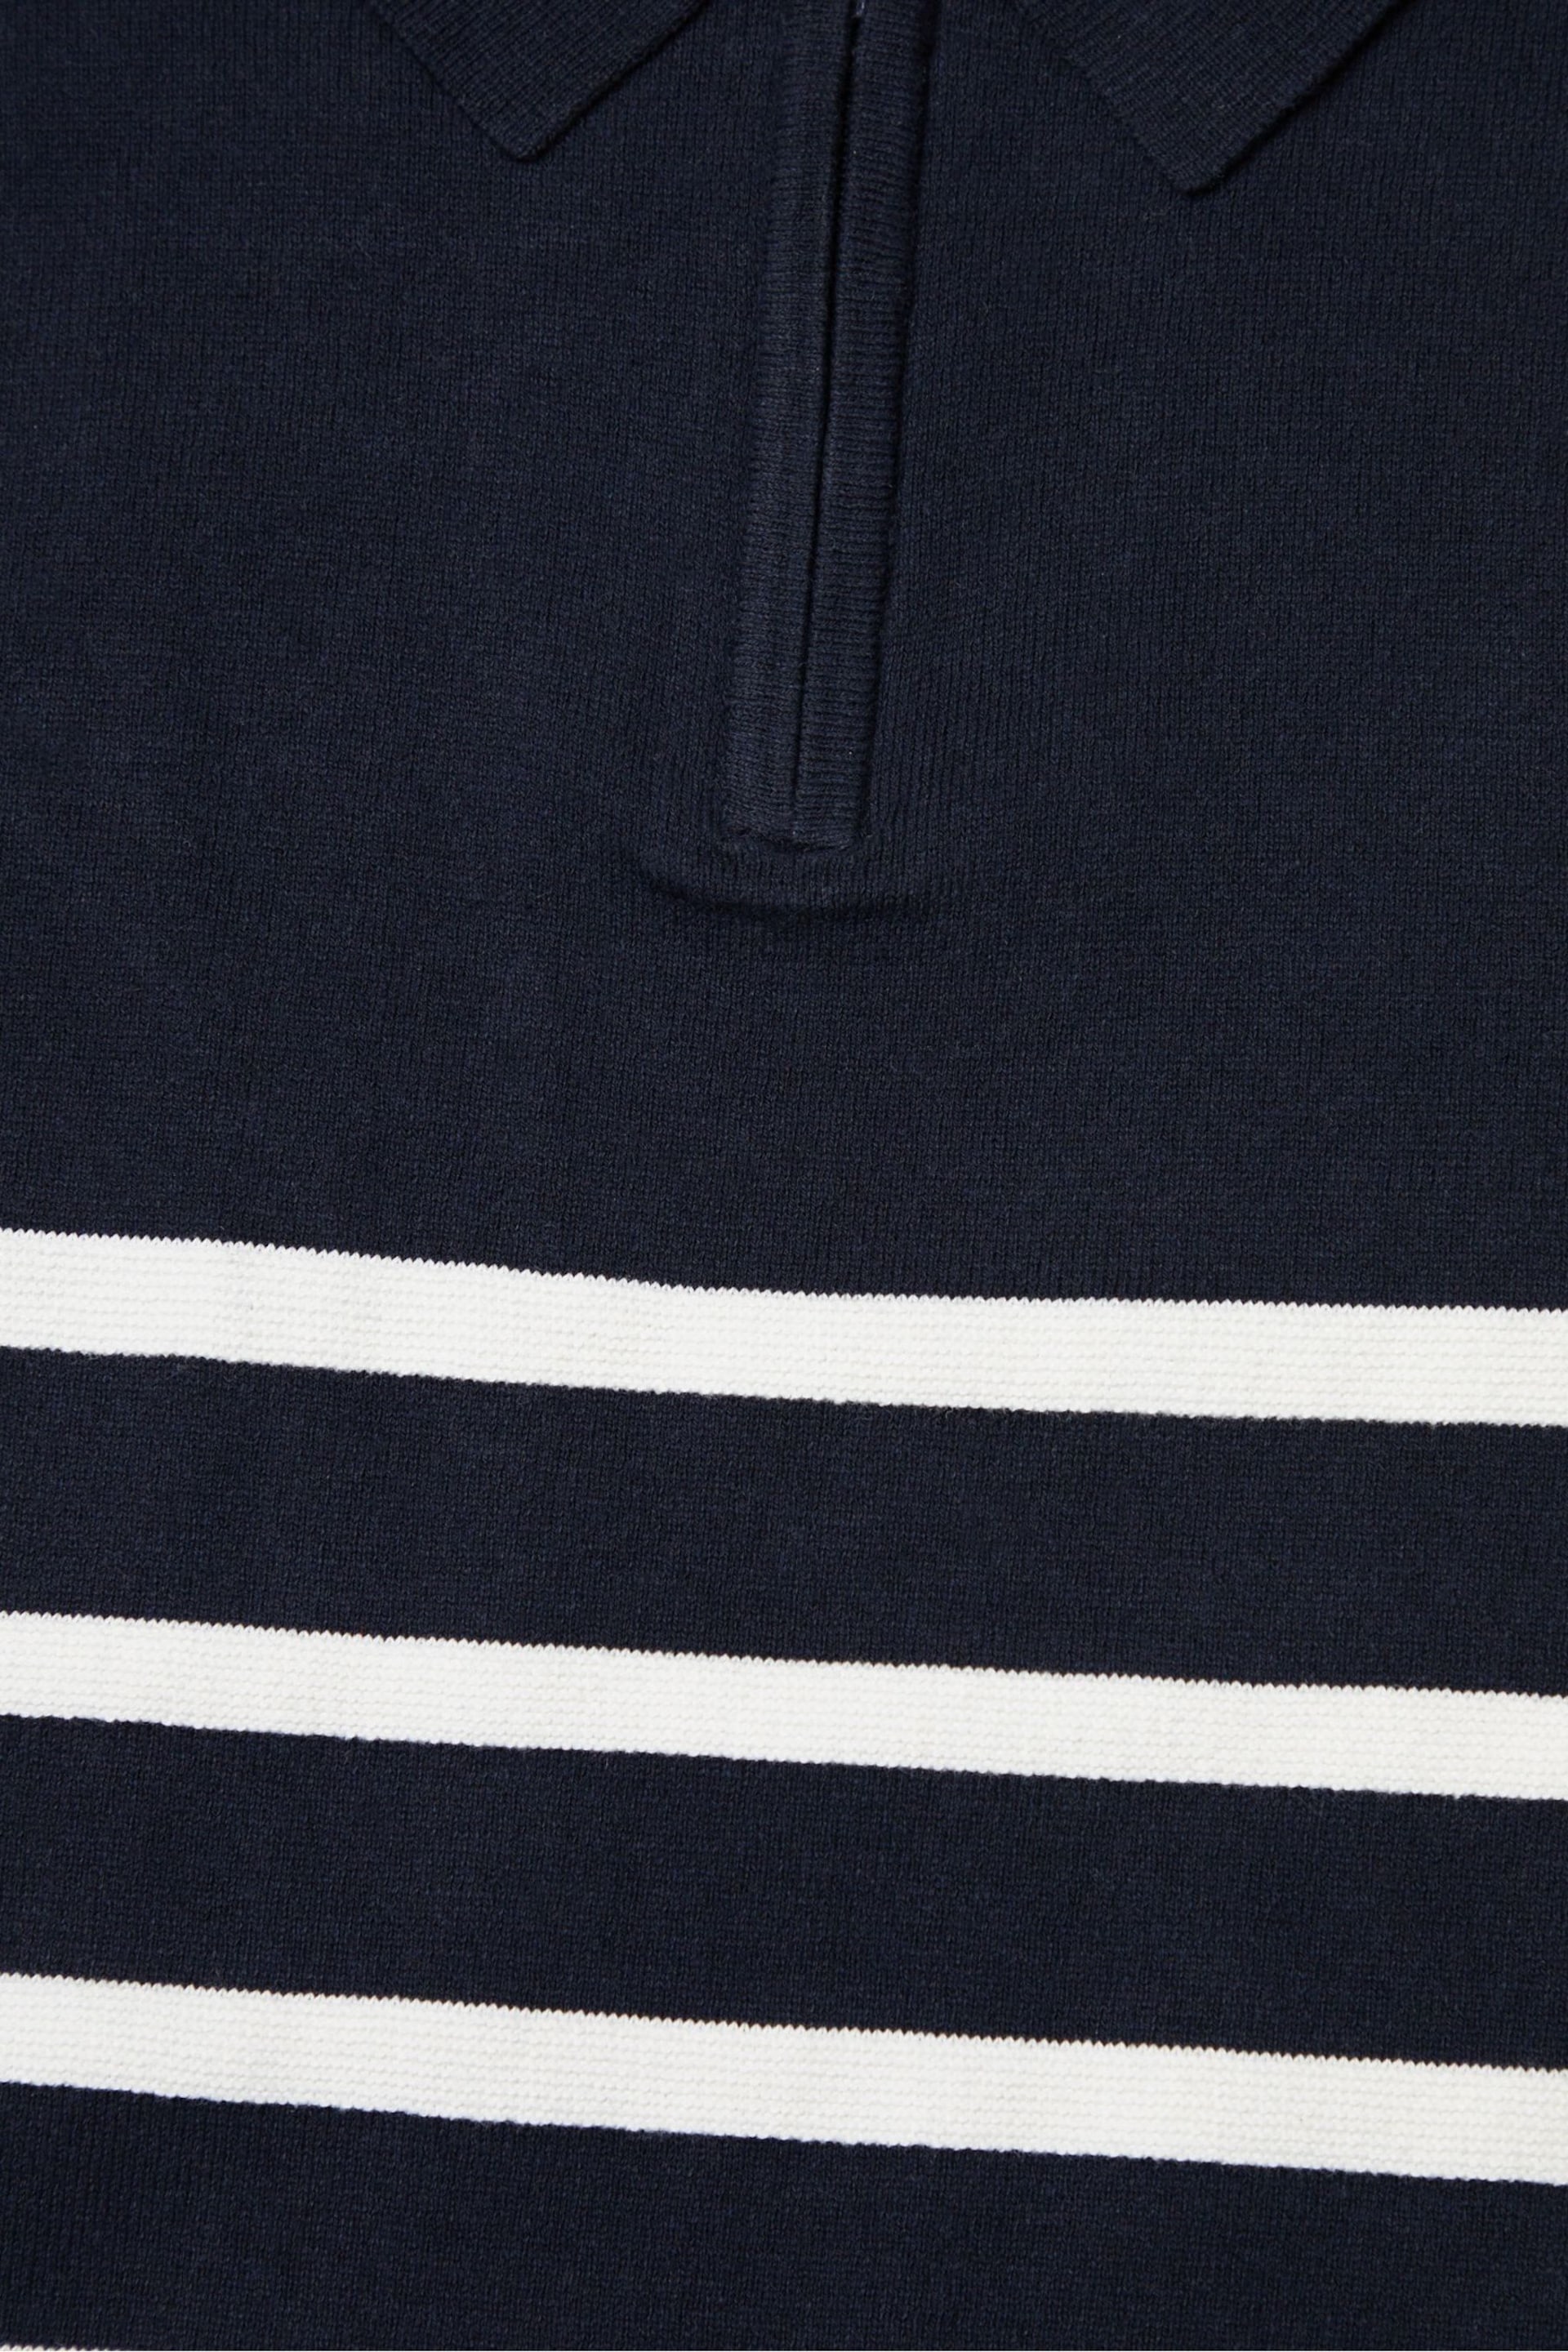 Threadbare Navy Blue & White Stripe Cotton Blend 1/4 Zip Knitted Polo Shirt - Image 6 of 6